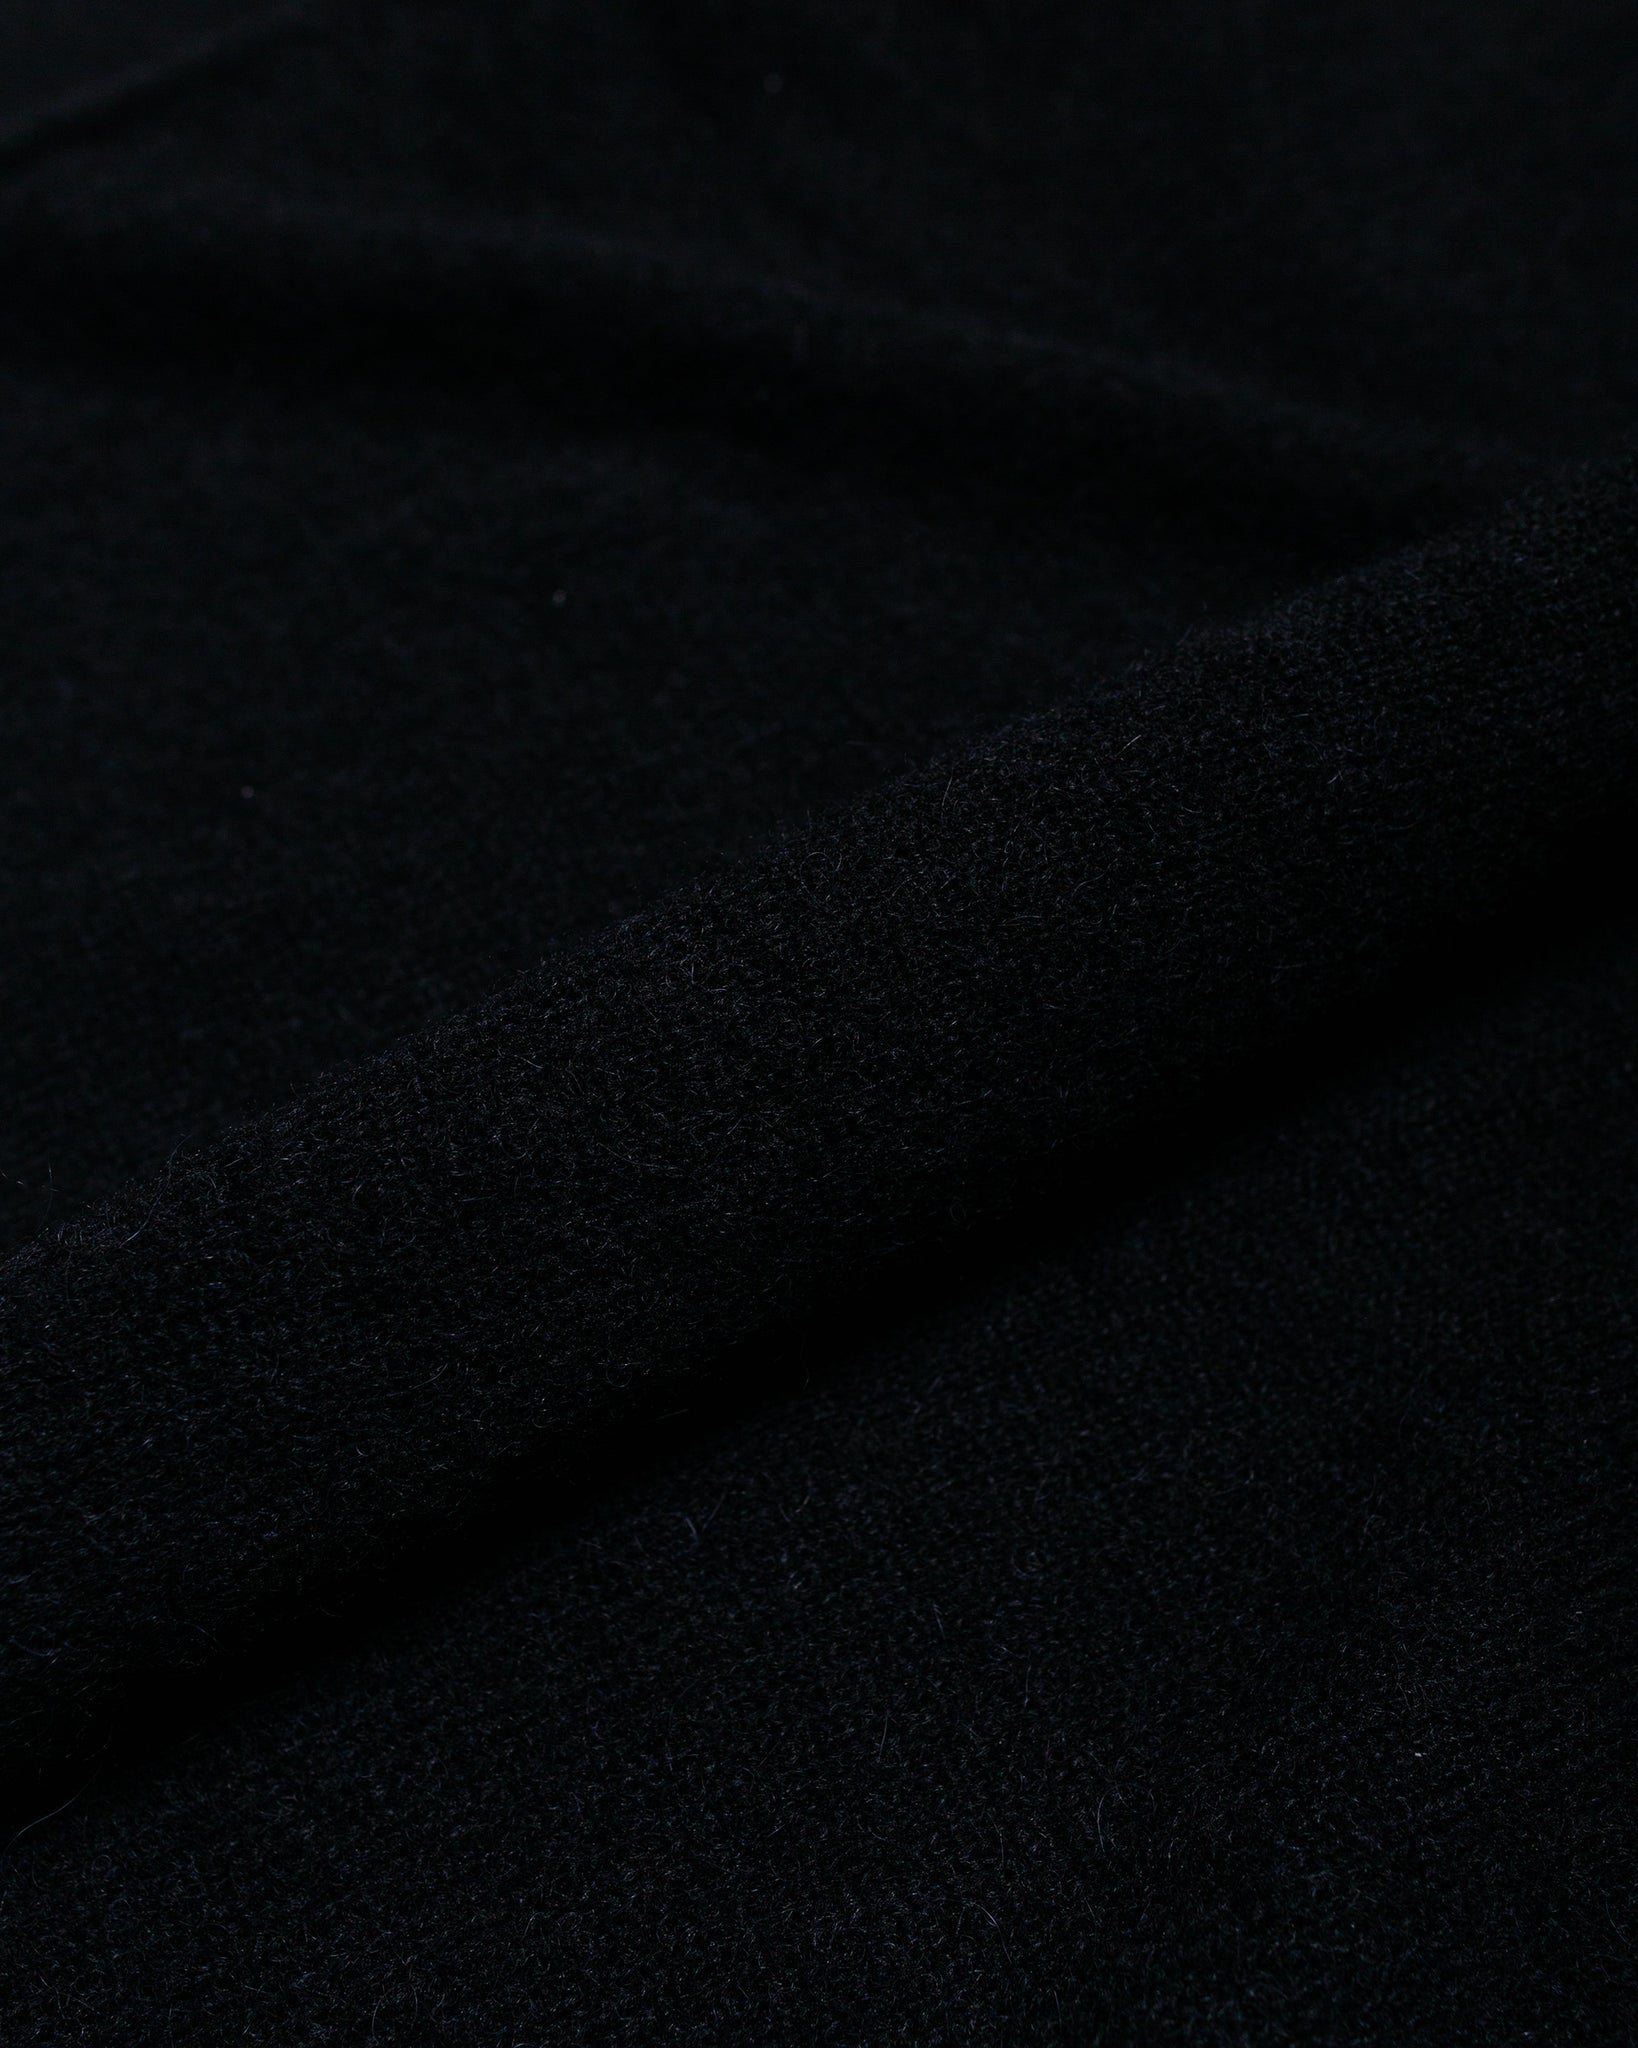 Our Legacy Evening Polo Black Fuzzy Alpaca fabric